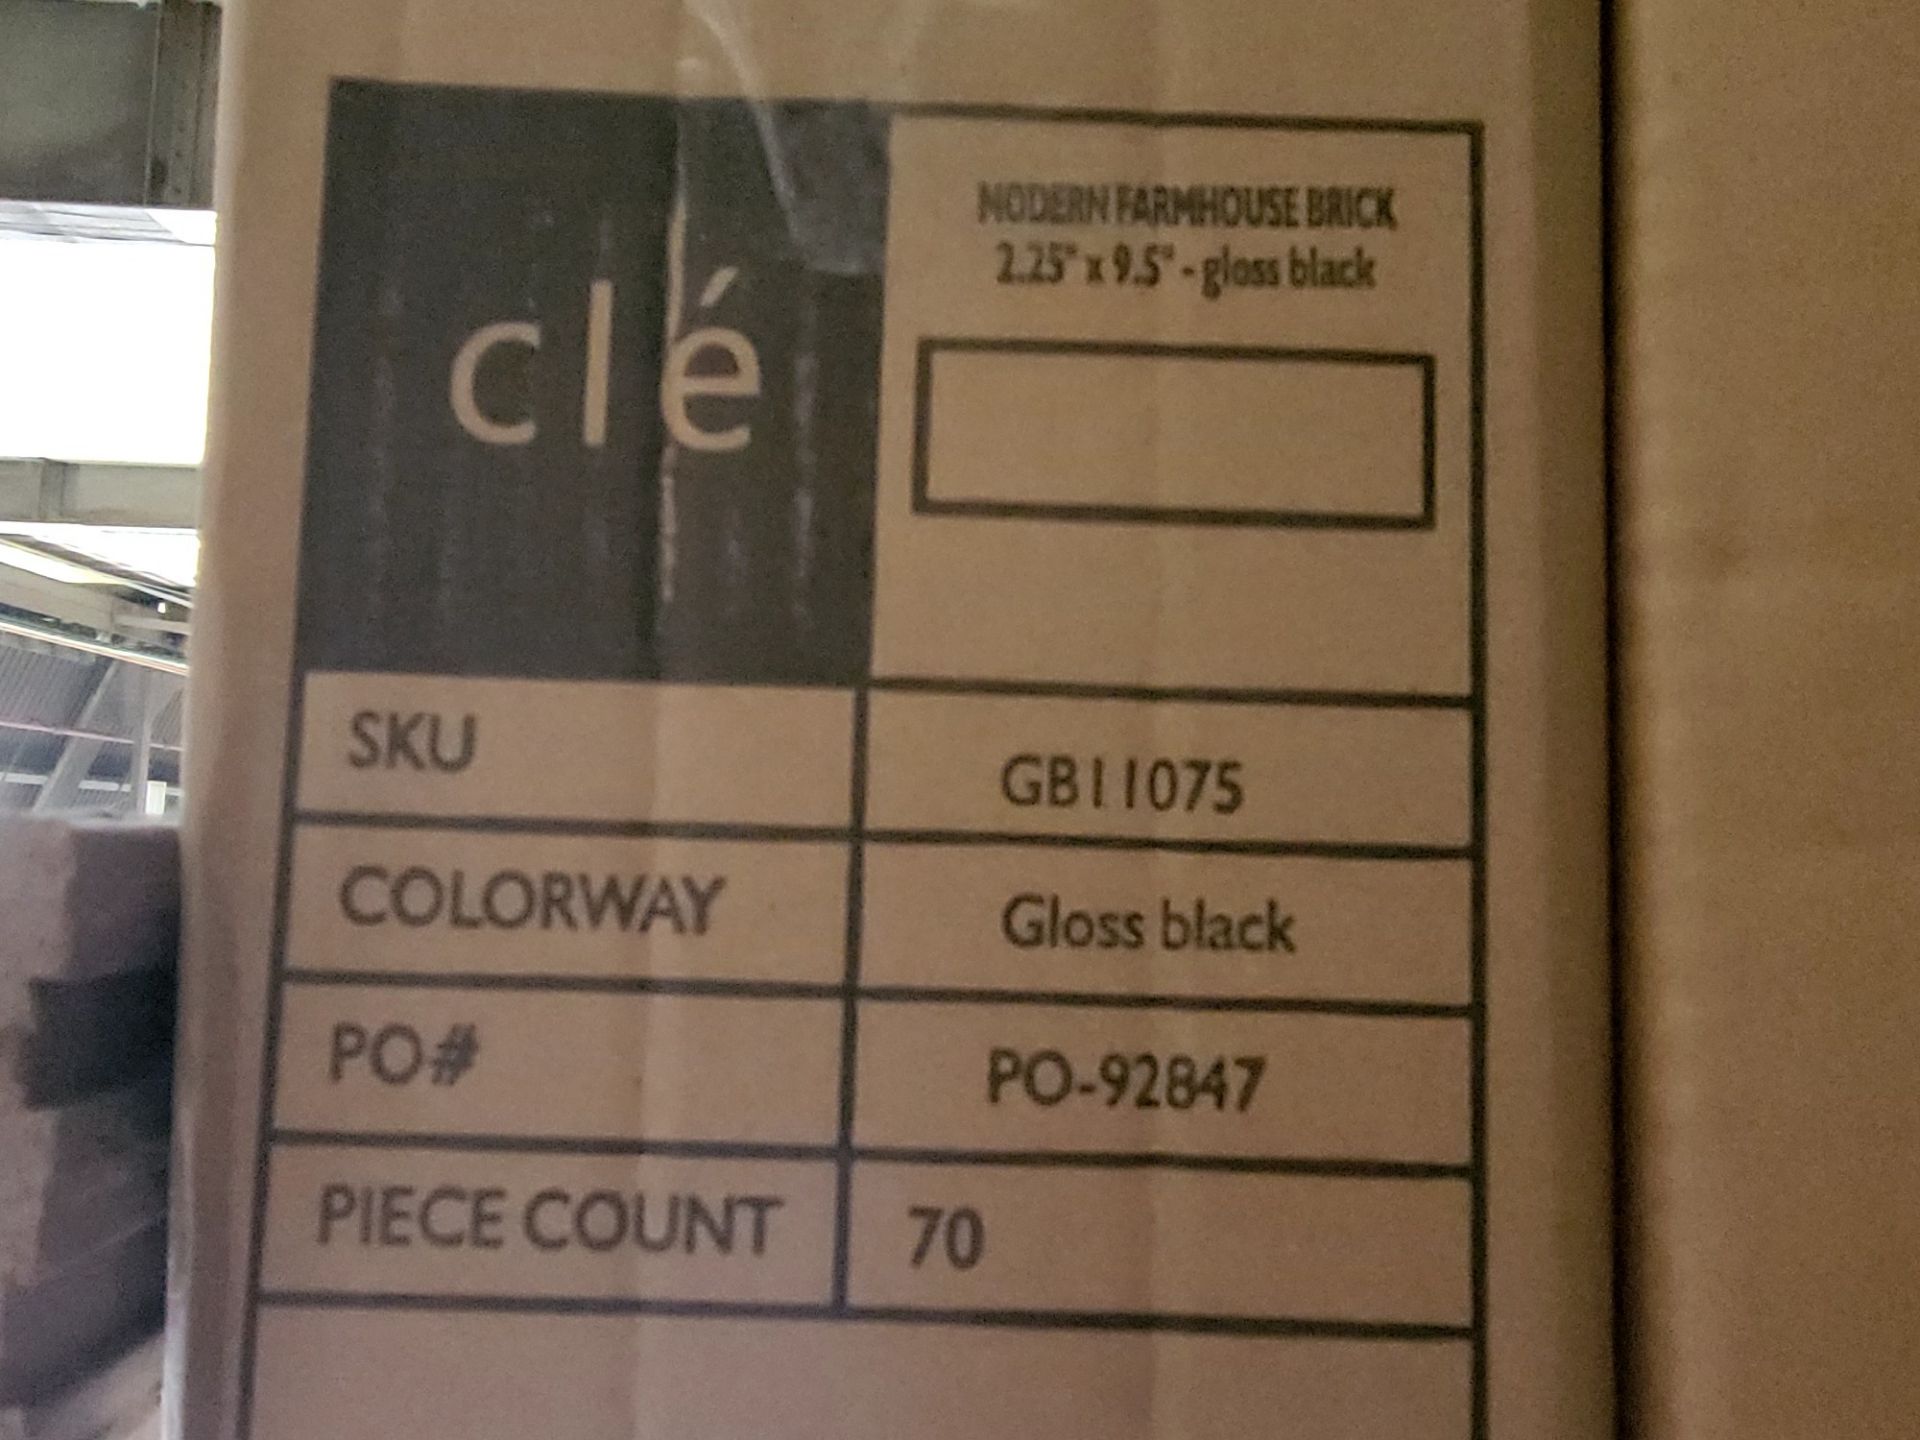 [sq ft] Cle 9 1/5" x 2 1/2" Modern Farmhouse Brick Gloss Black - Image 2 of 2